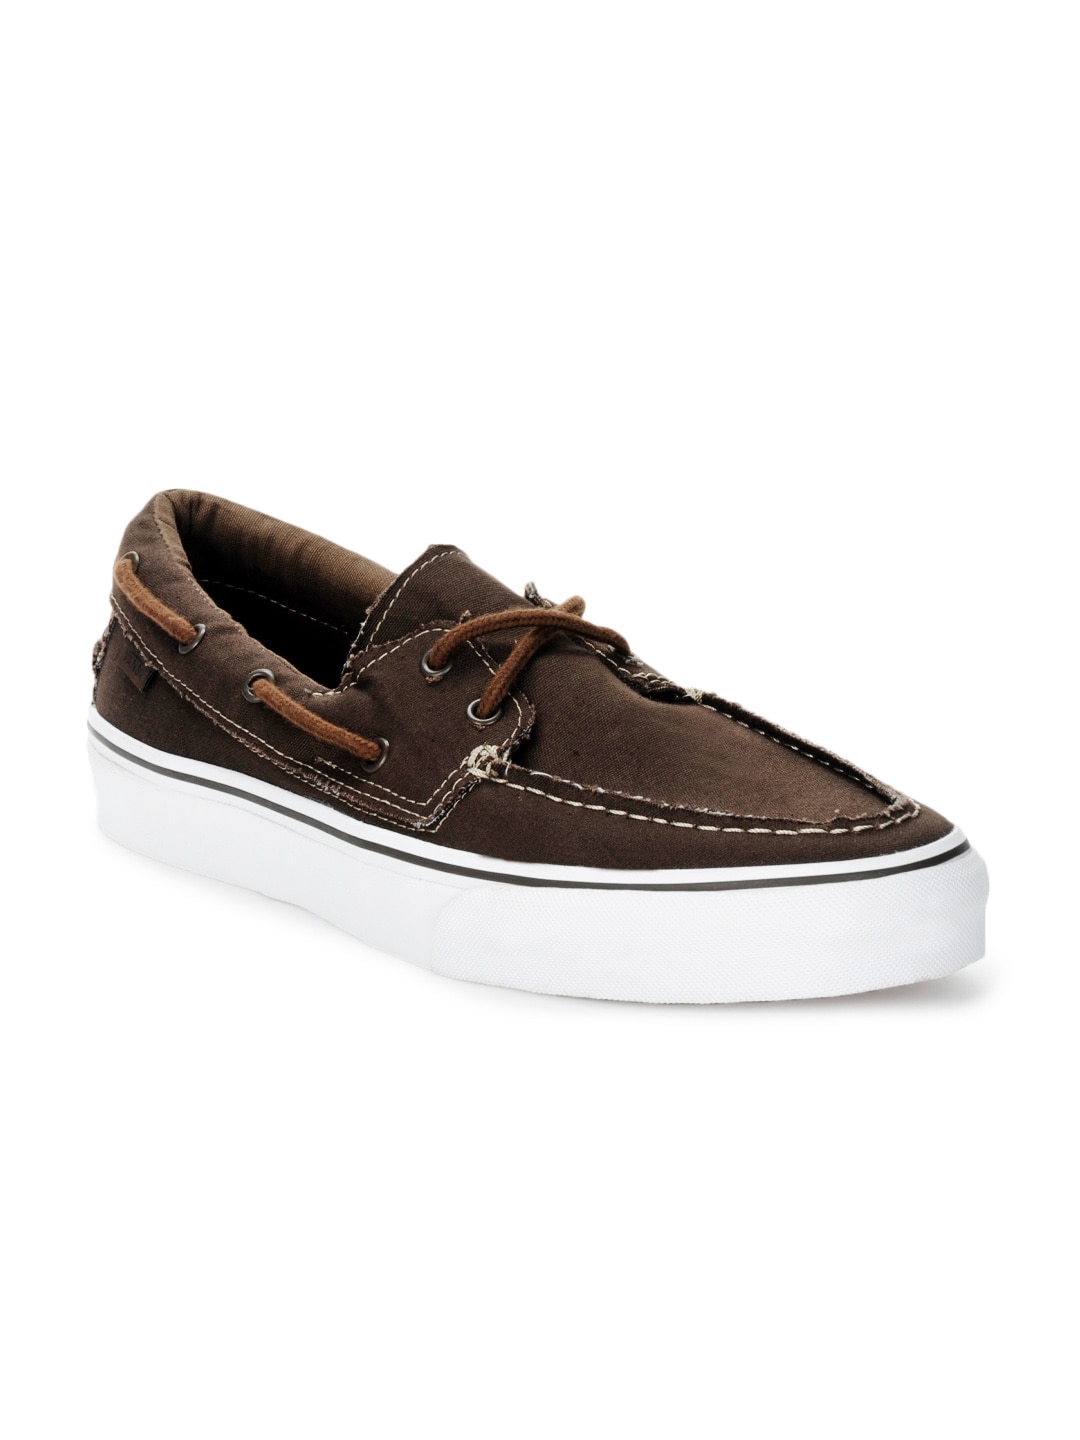 Vans Men Brown Zapato Del Barco Shoes